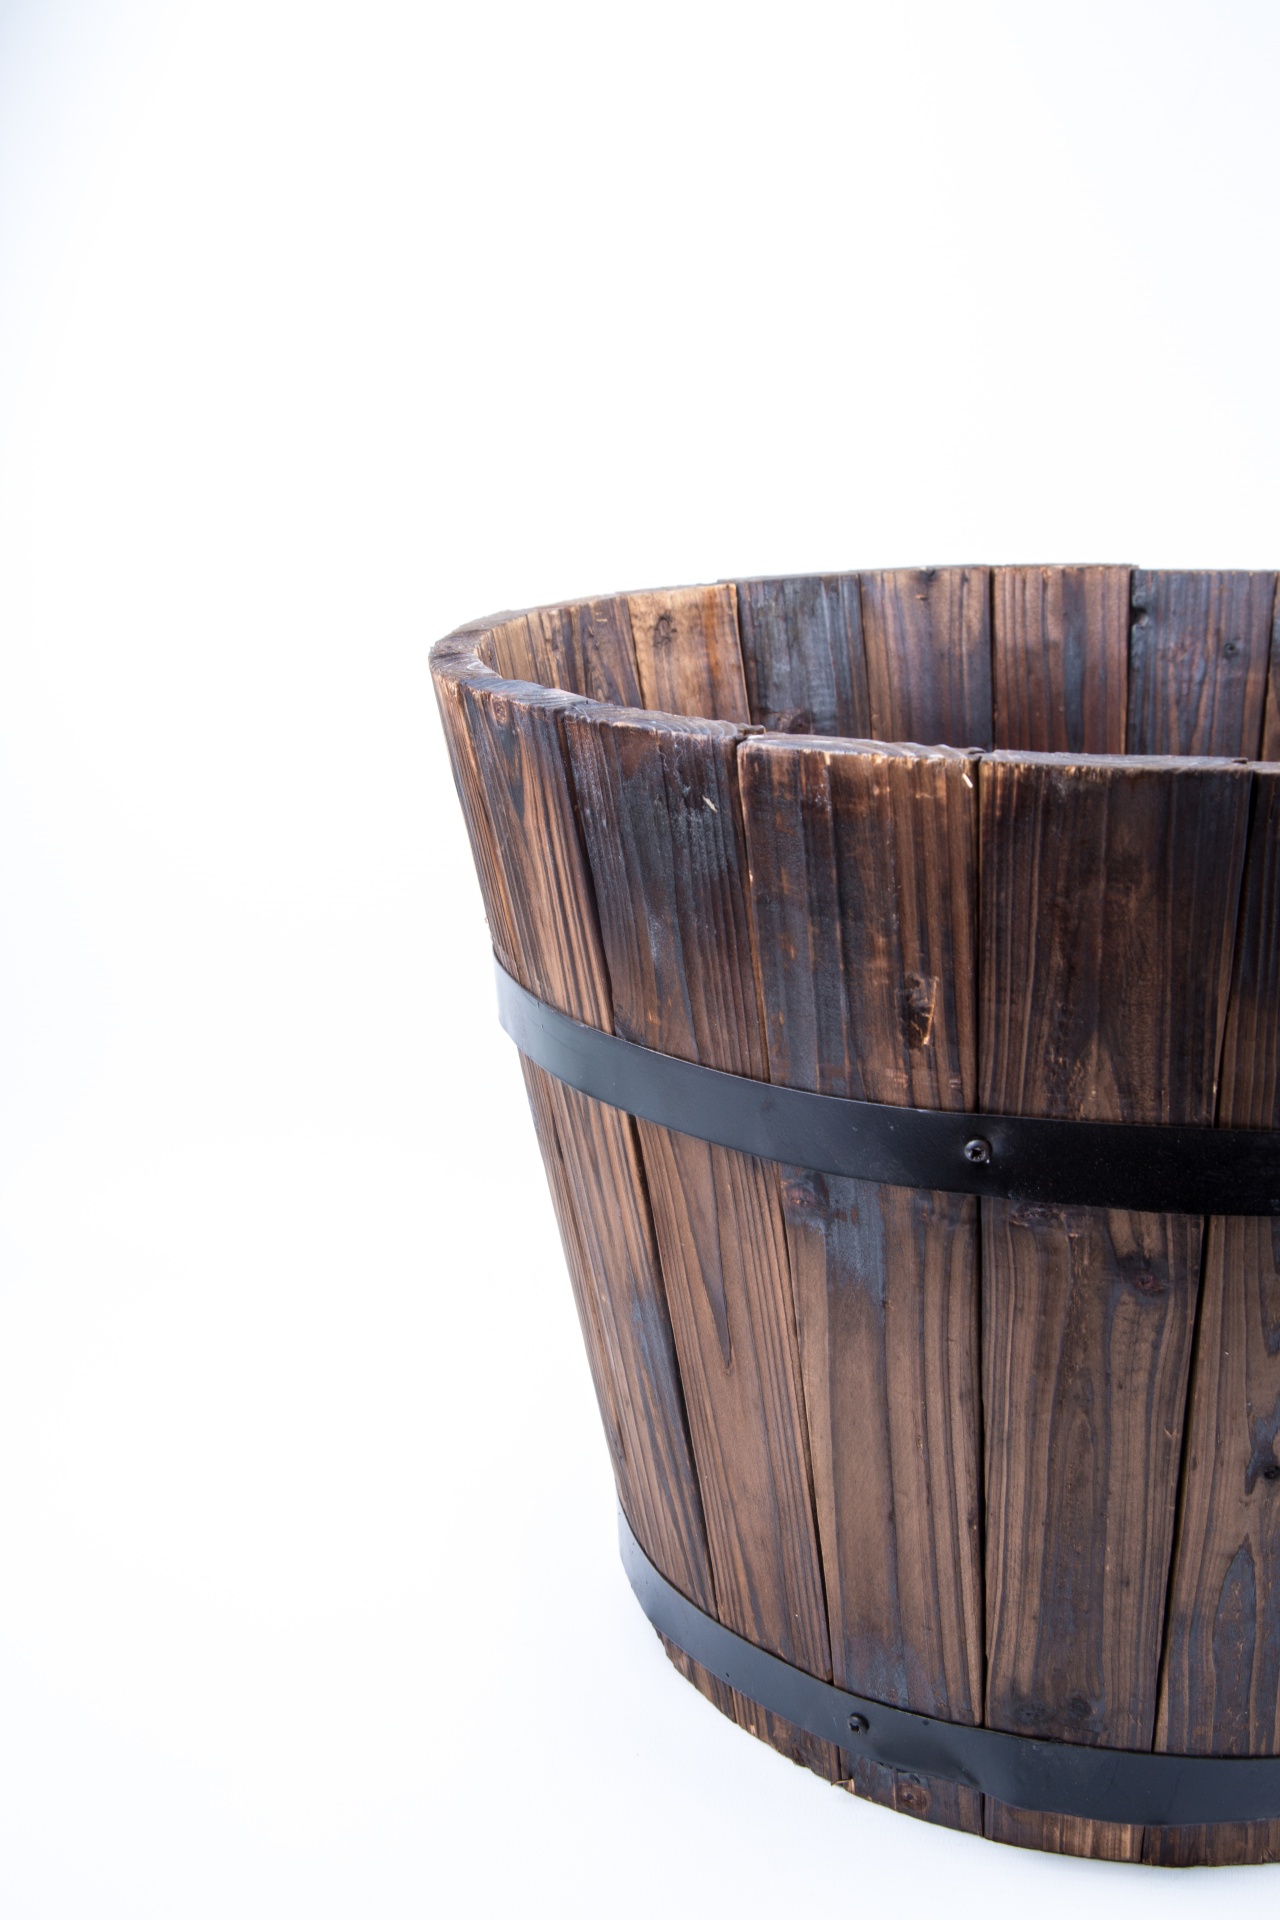 bucket wooden wood free photo